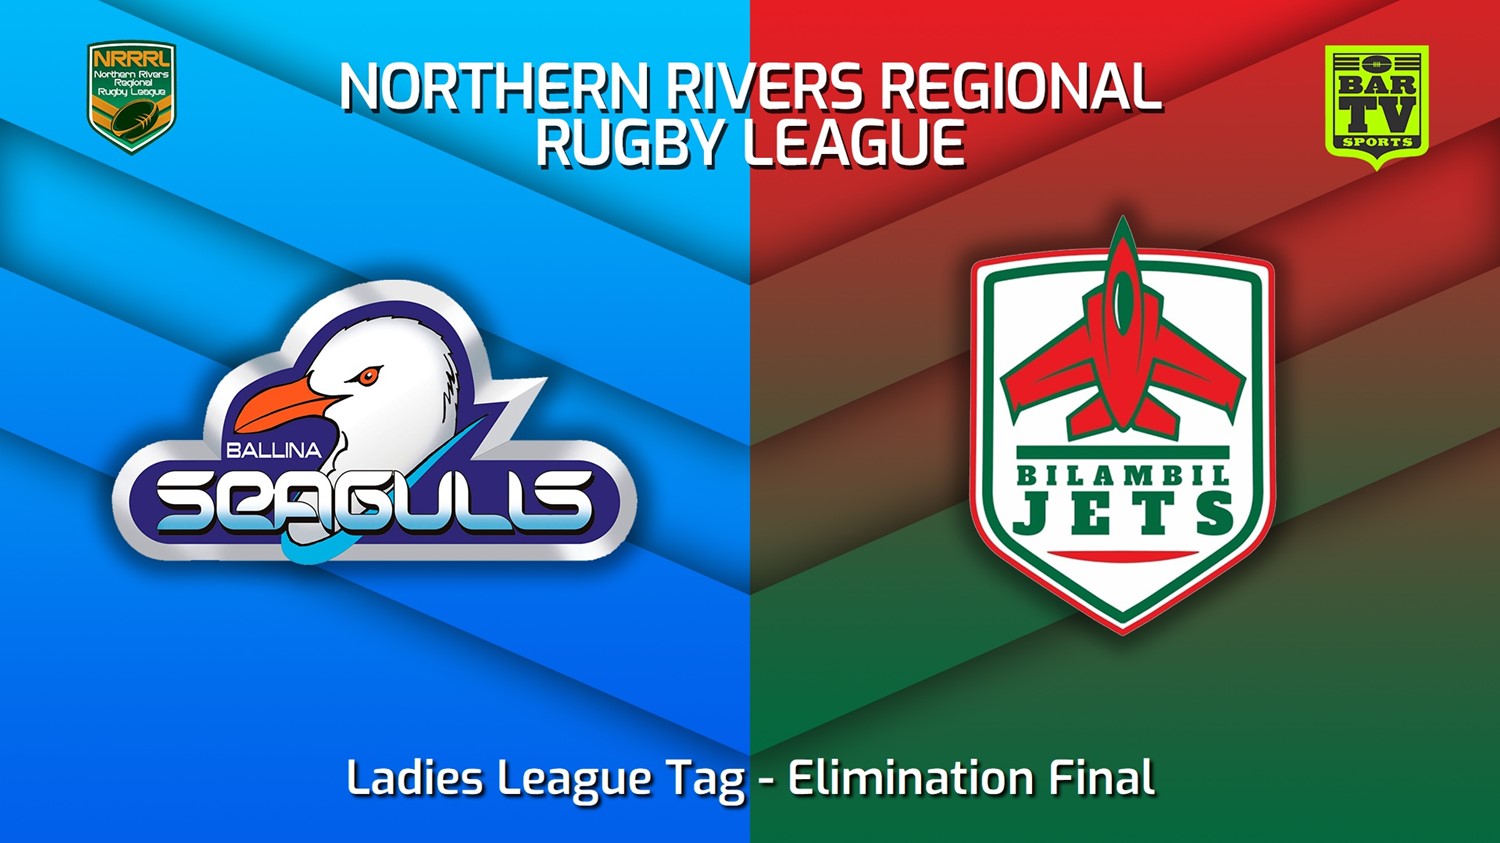 230826-Northern Rivers Elimination Final - Ladies League Tag - Ballina Seagulls v Bilambil Jets Slate Image